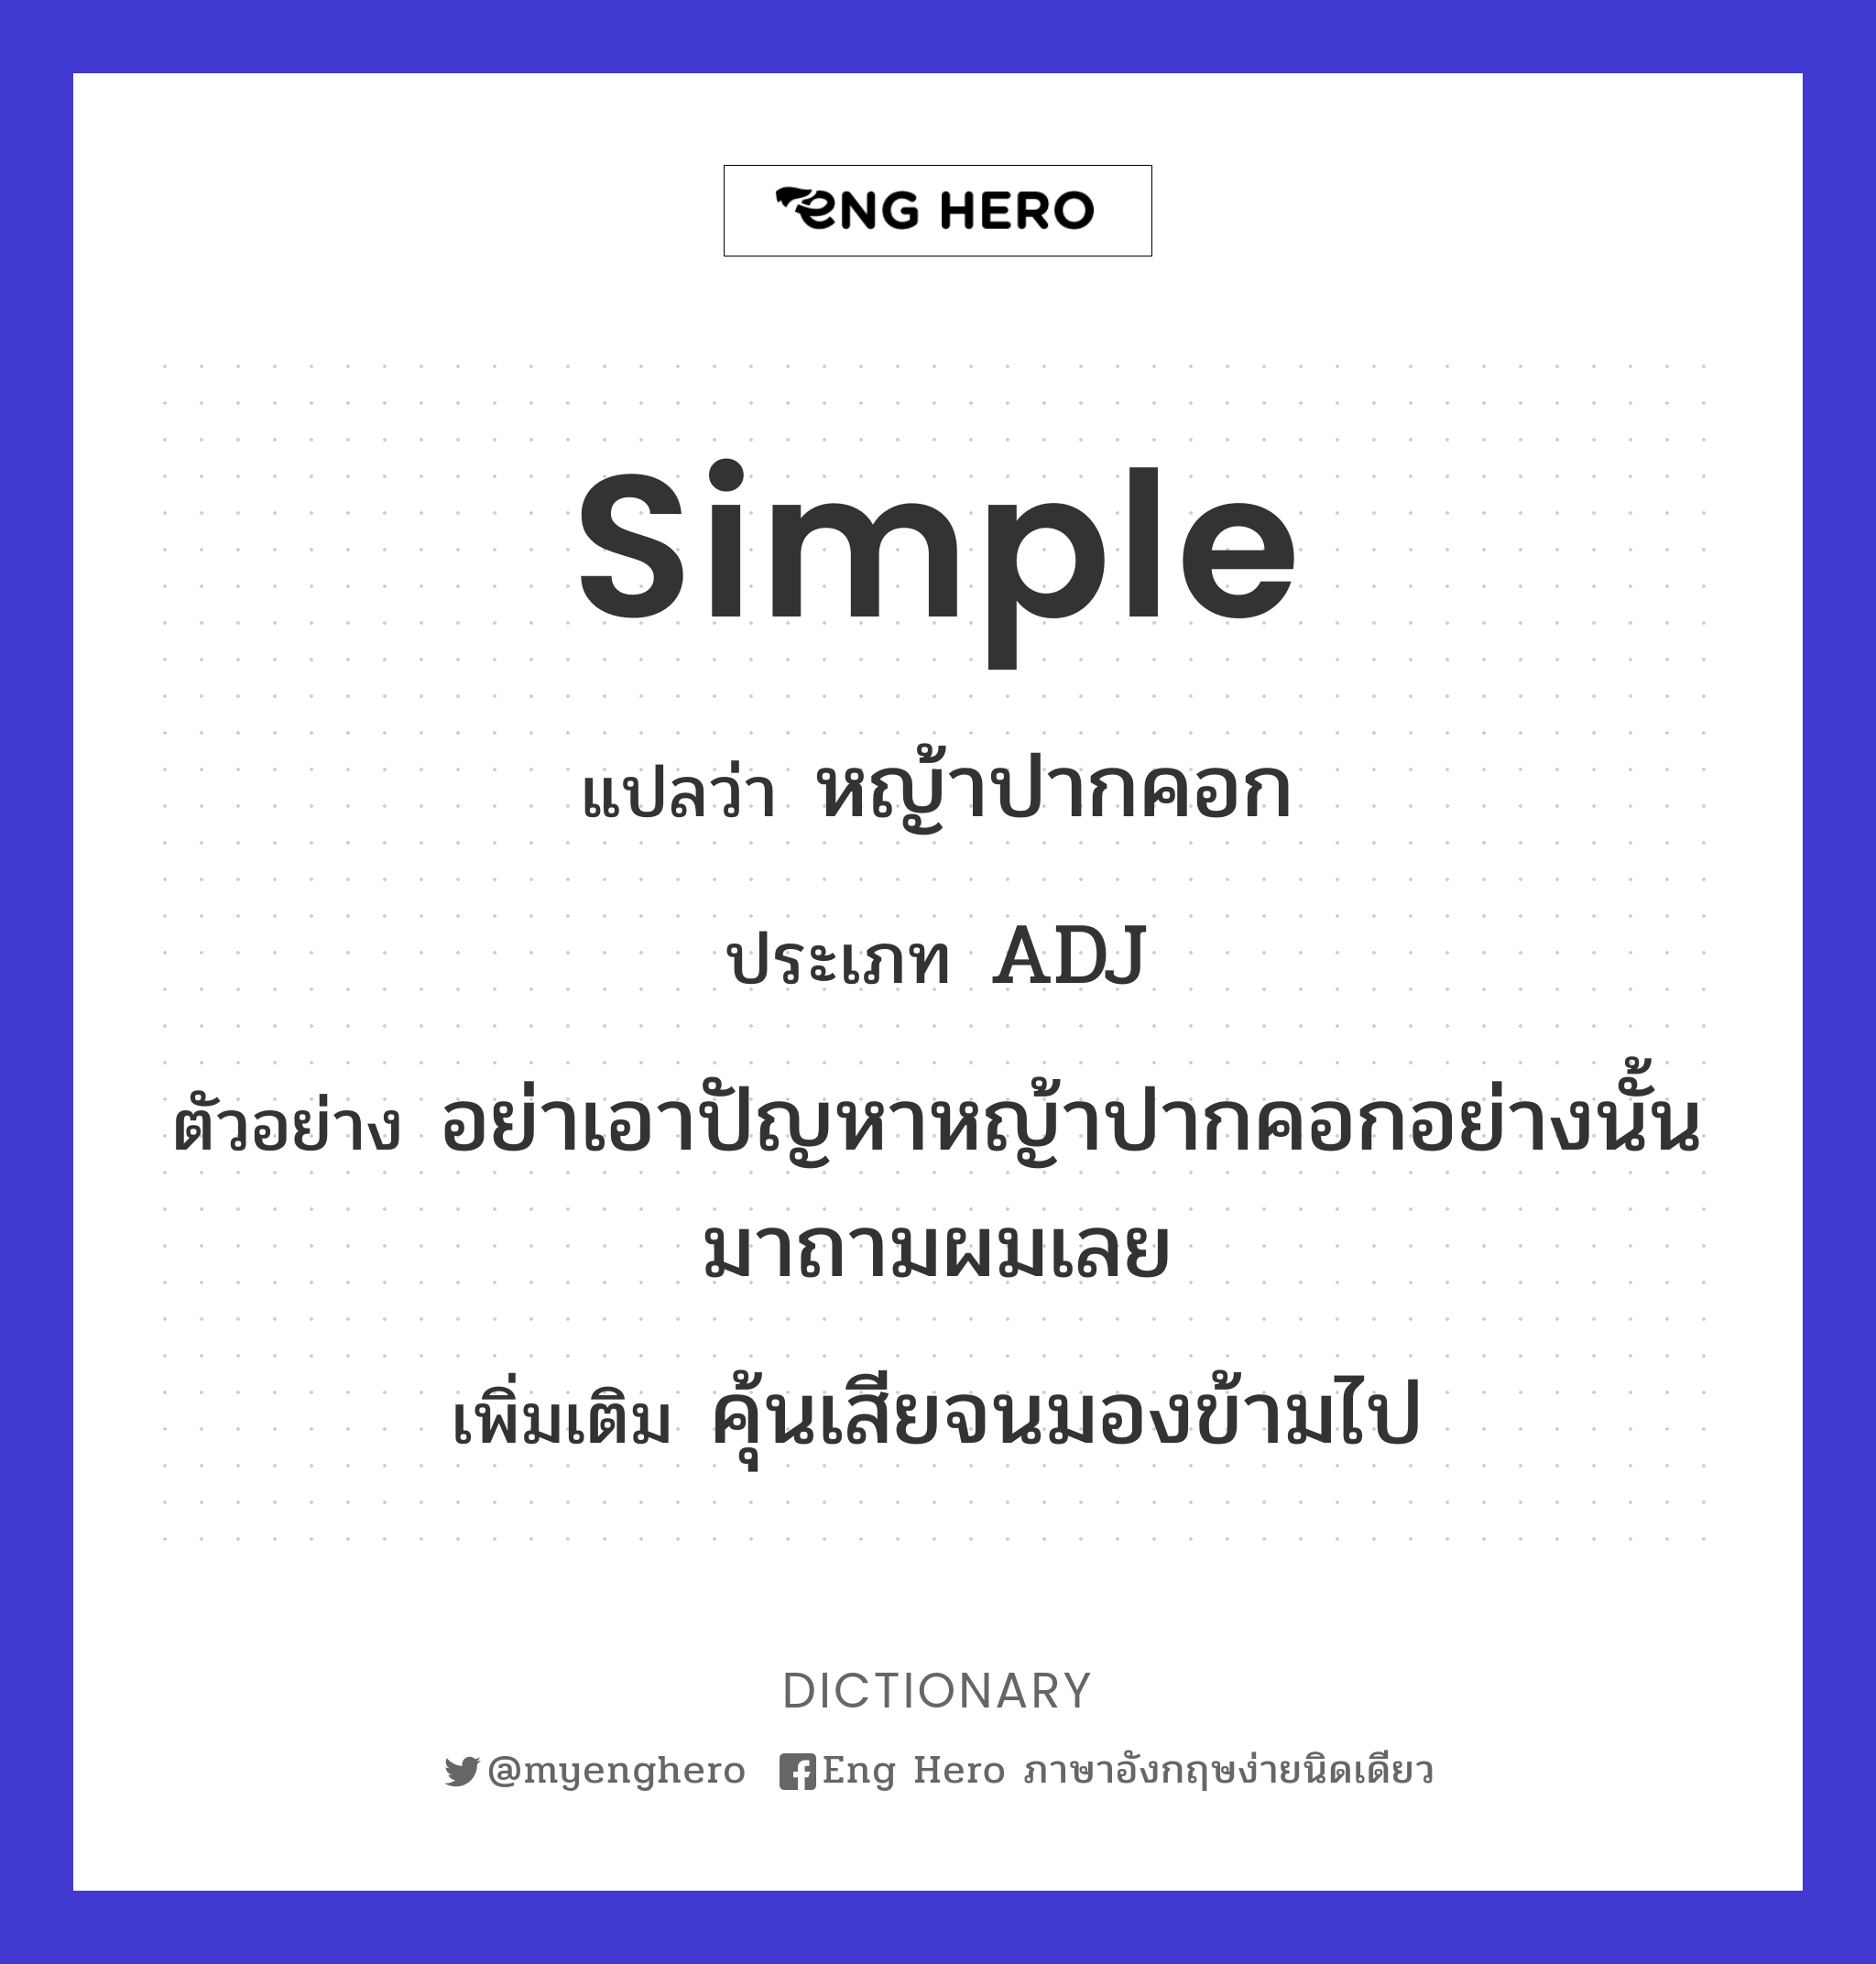 simple